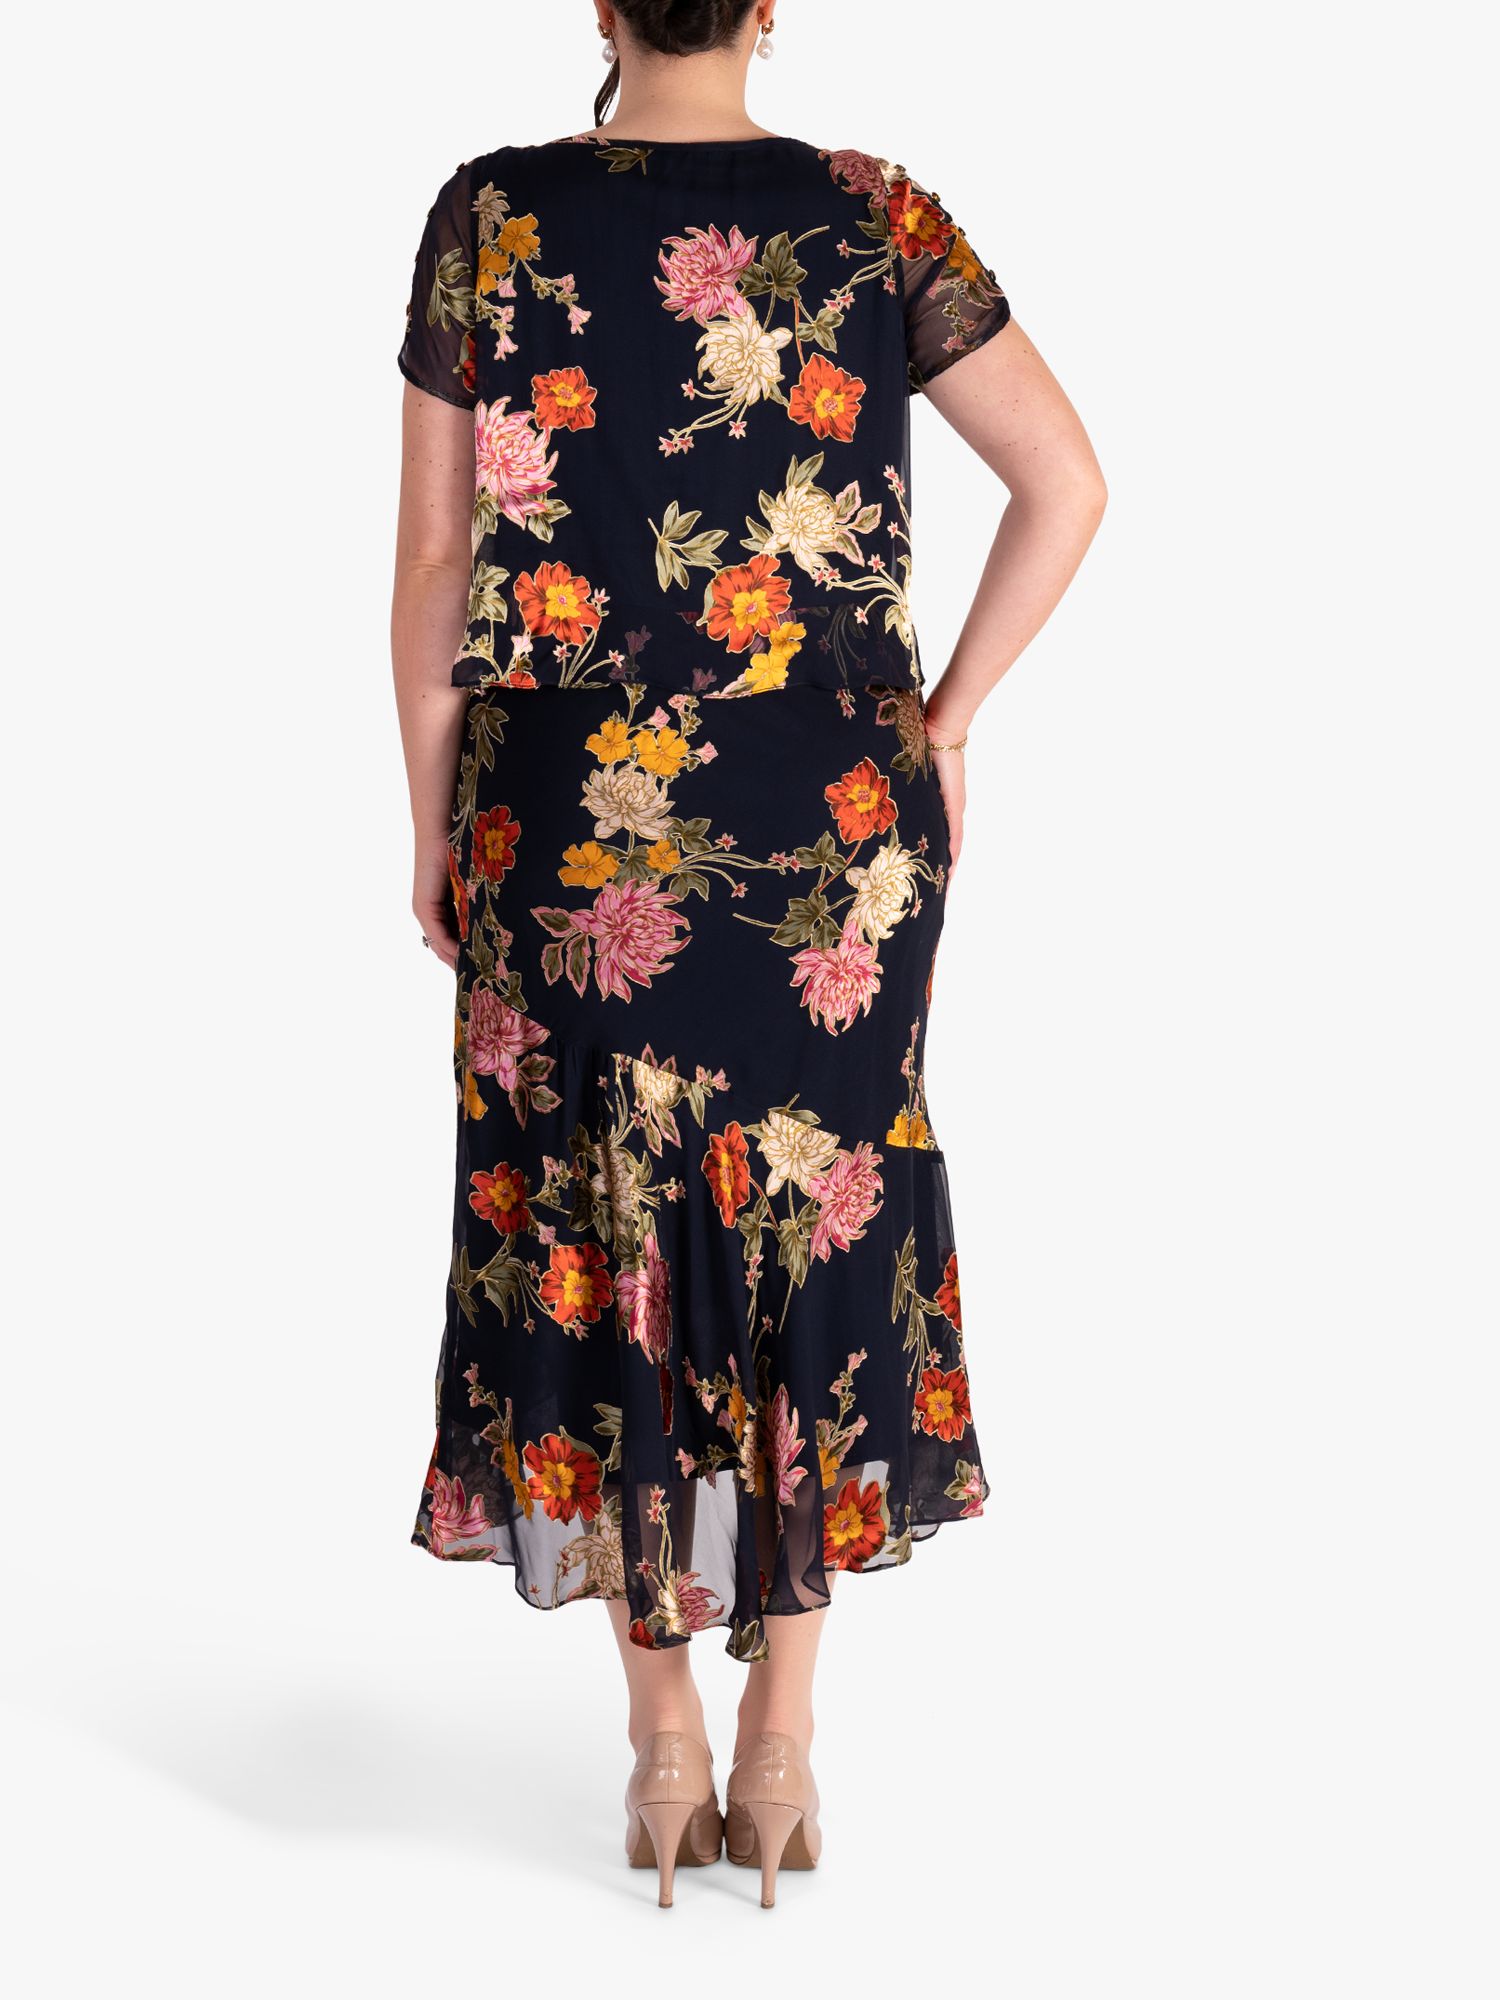 chesca Chrysanthemum Dress, Navy/Multi, 16